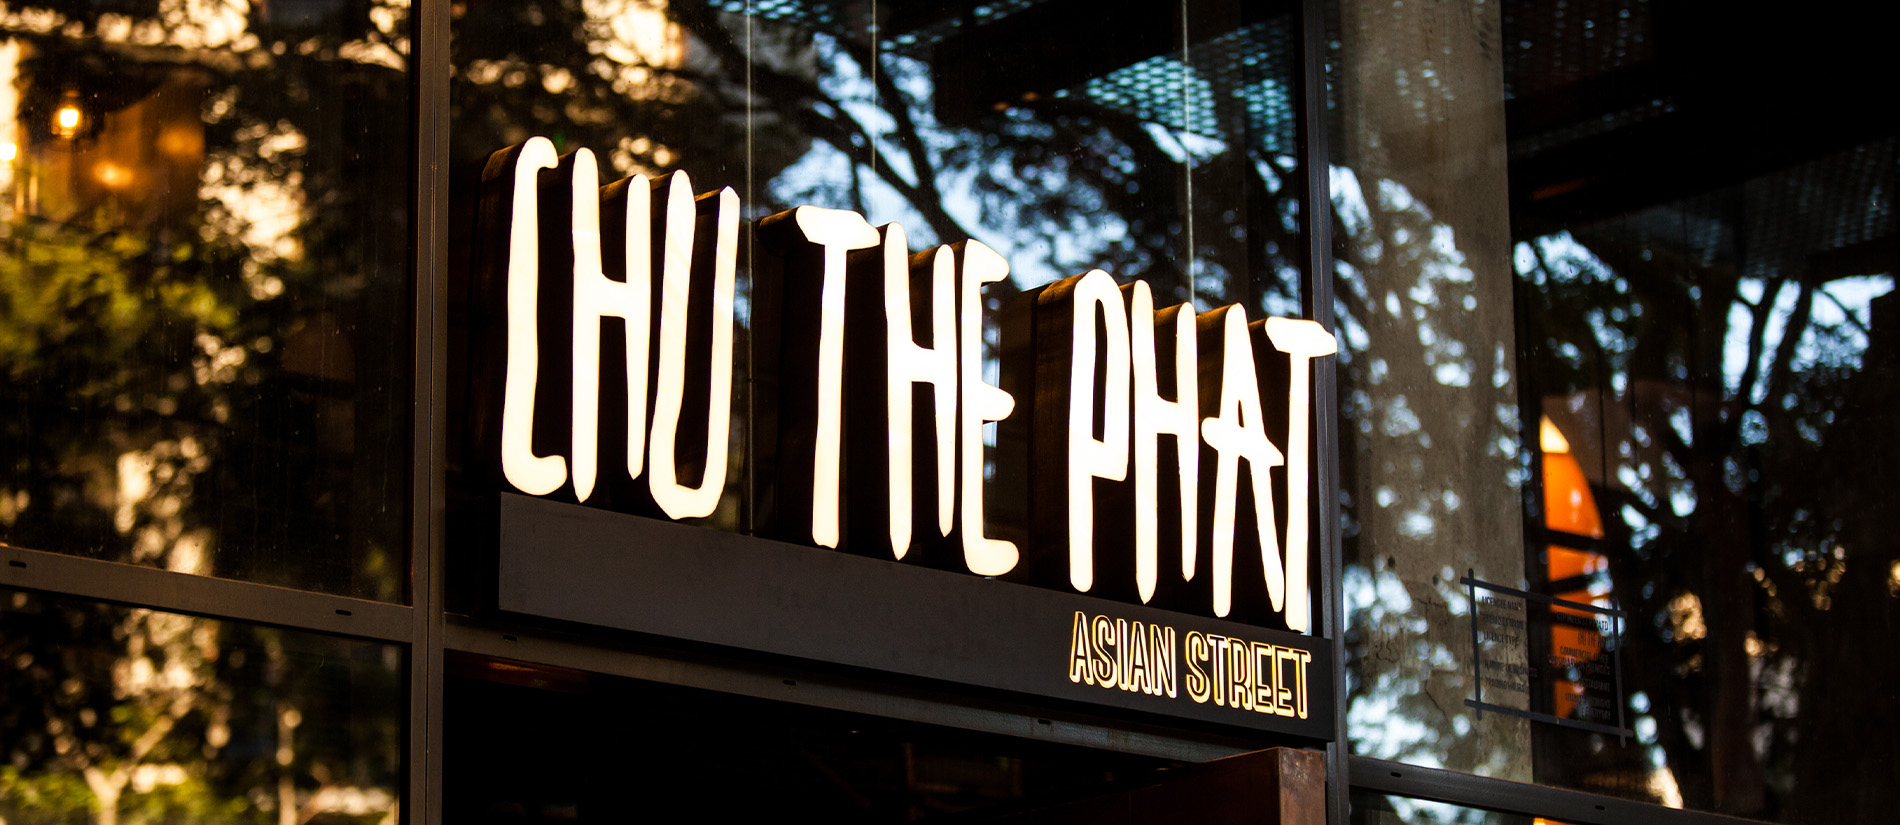 Chu The Phat